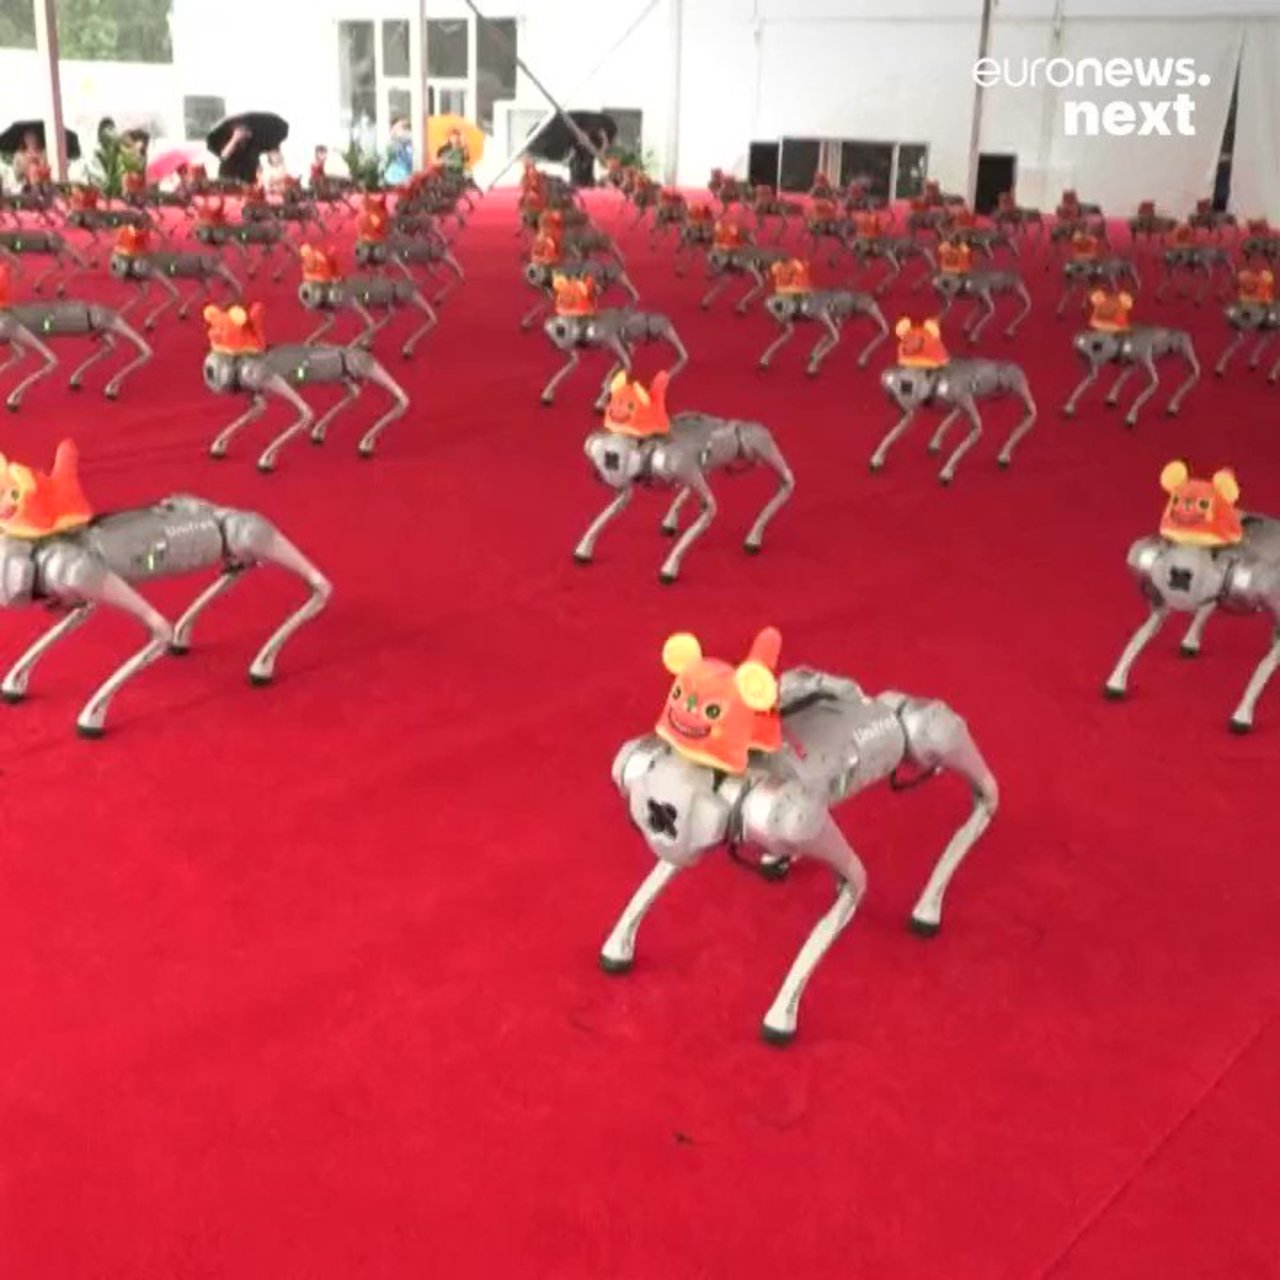 Highlights of the annual World #Robot Conference in Beijing by @euronewsnext #AI #ArtificialIntelligence #MI #Robotics #Engineering #Innovation #FutureOfWork #Tech cc: @ronald_vanloon @pbalakrishnarao @chr1sa https://t.co/sis6dz238r